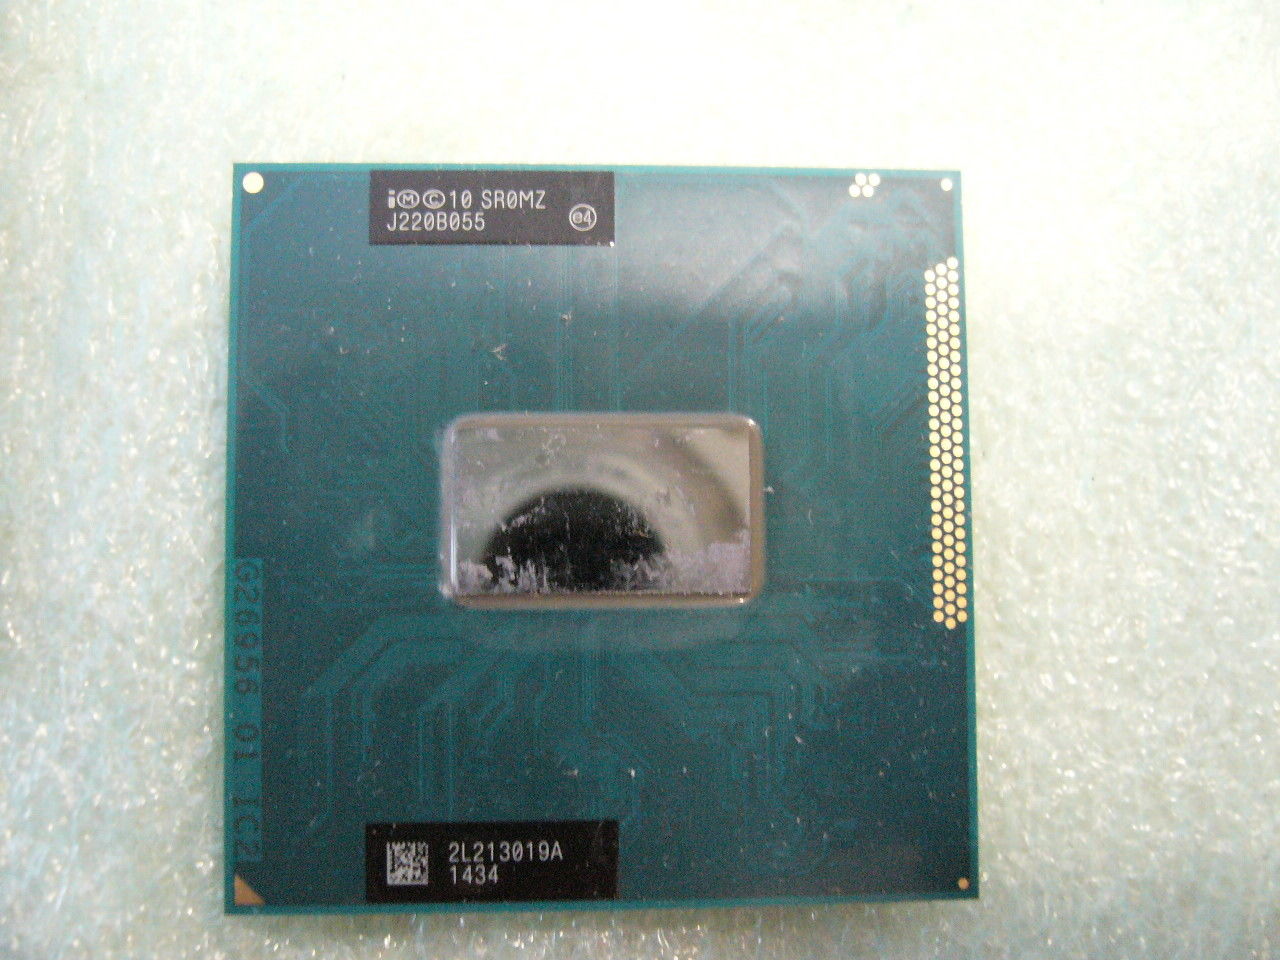 QTY 1x Intel CPU i5-3210M Dual-Core 2.5 Ghz PGA988 SR0MZ Socket G2 NOT WORKING - Click Image to Close